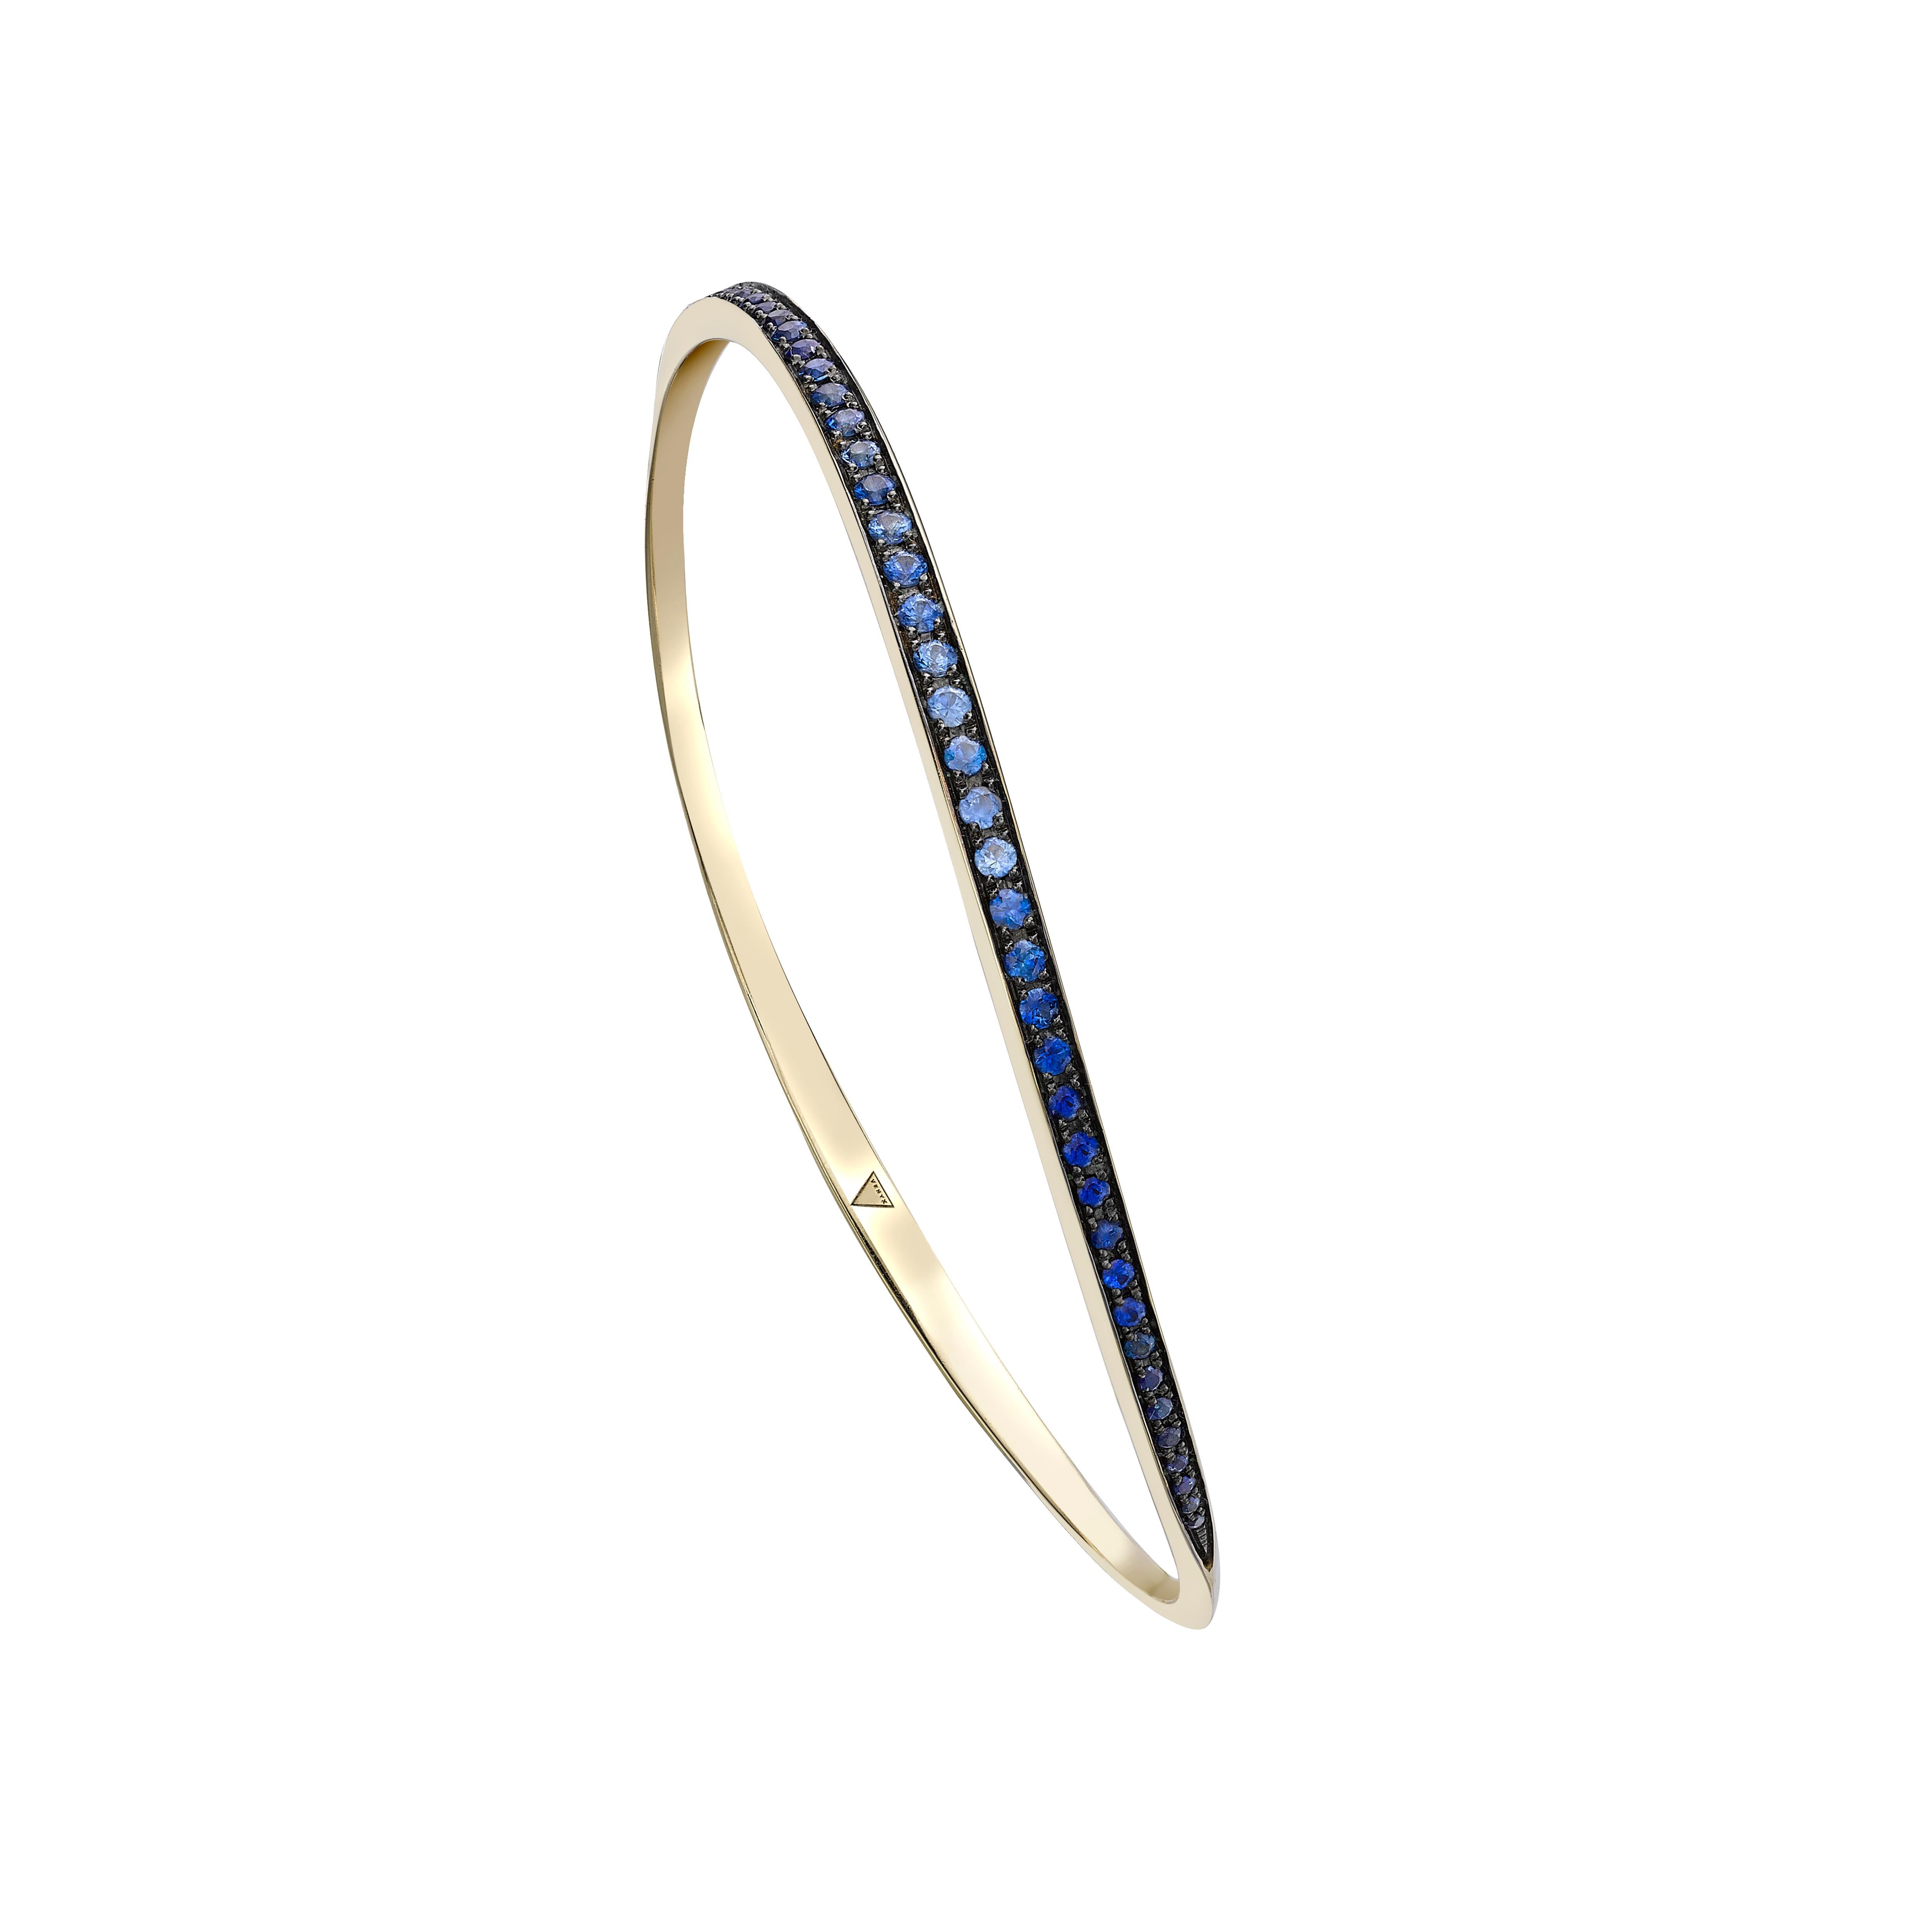 Contemporary Venyx 18 Karat Gold and Sapphire Orbit Bangle Bracelet